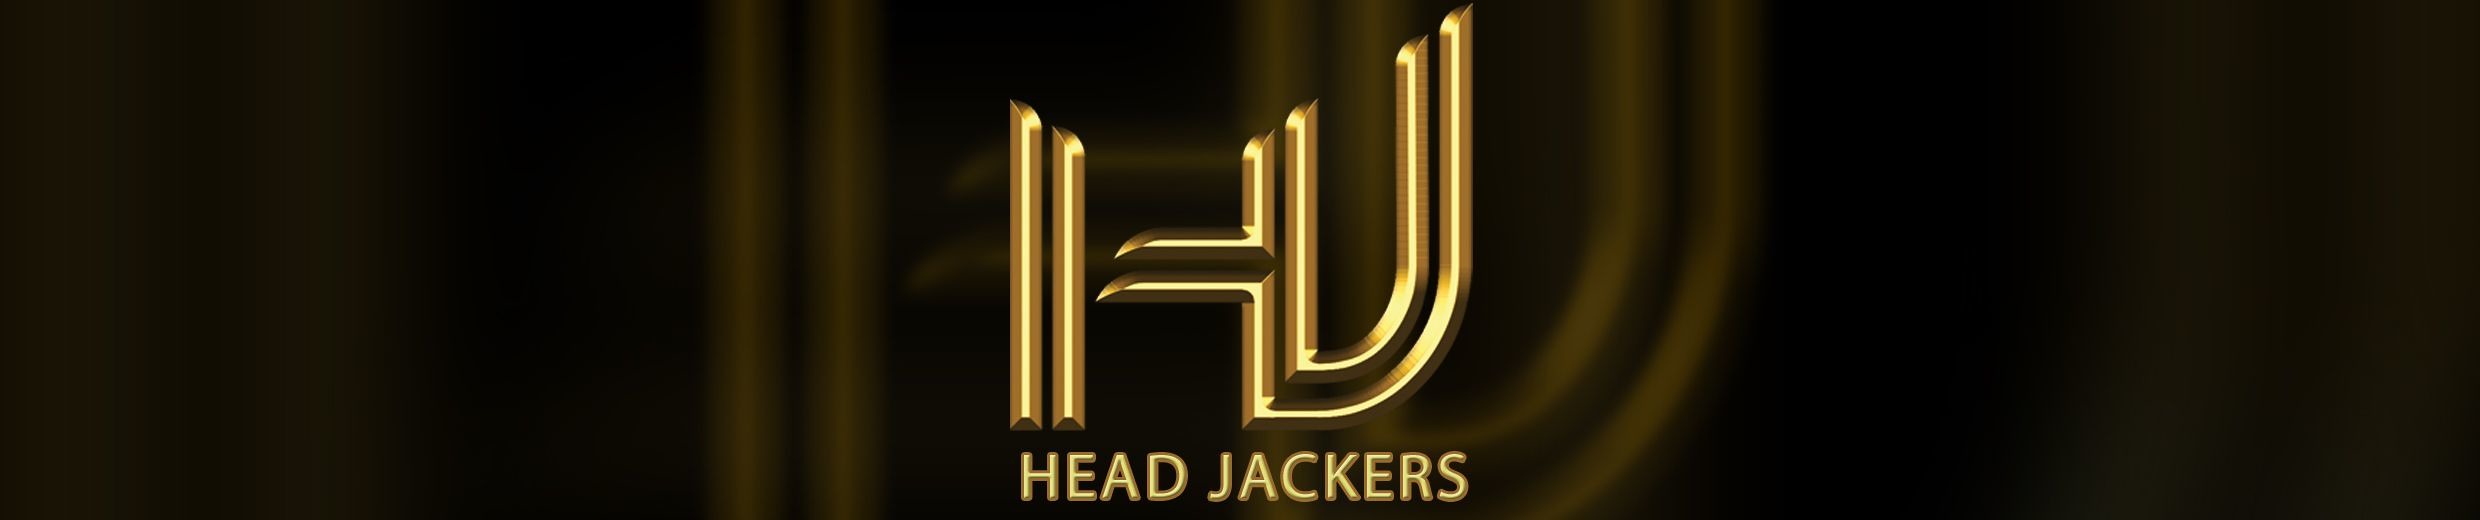 Midnight Management - Head Jackers